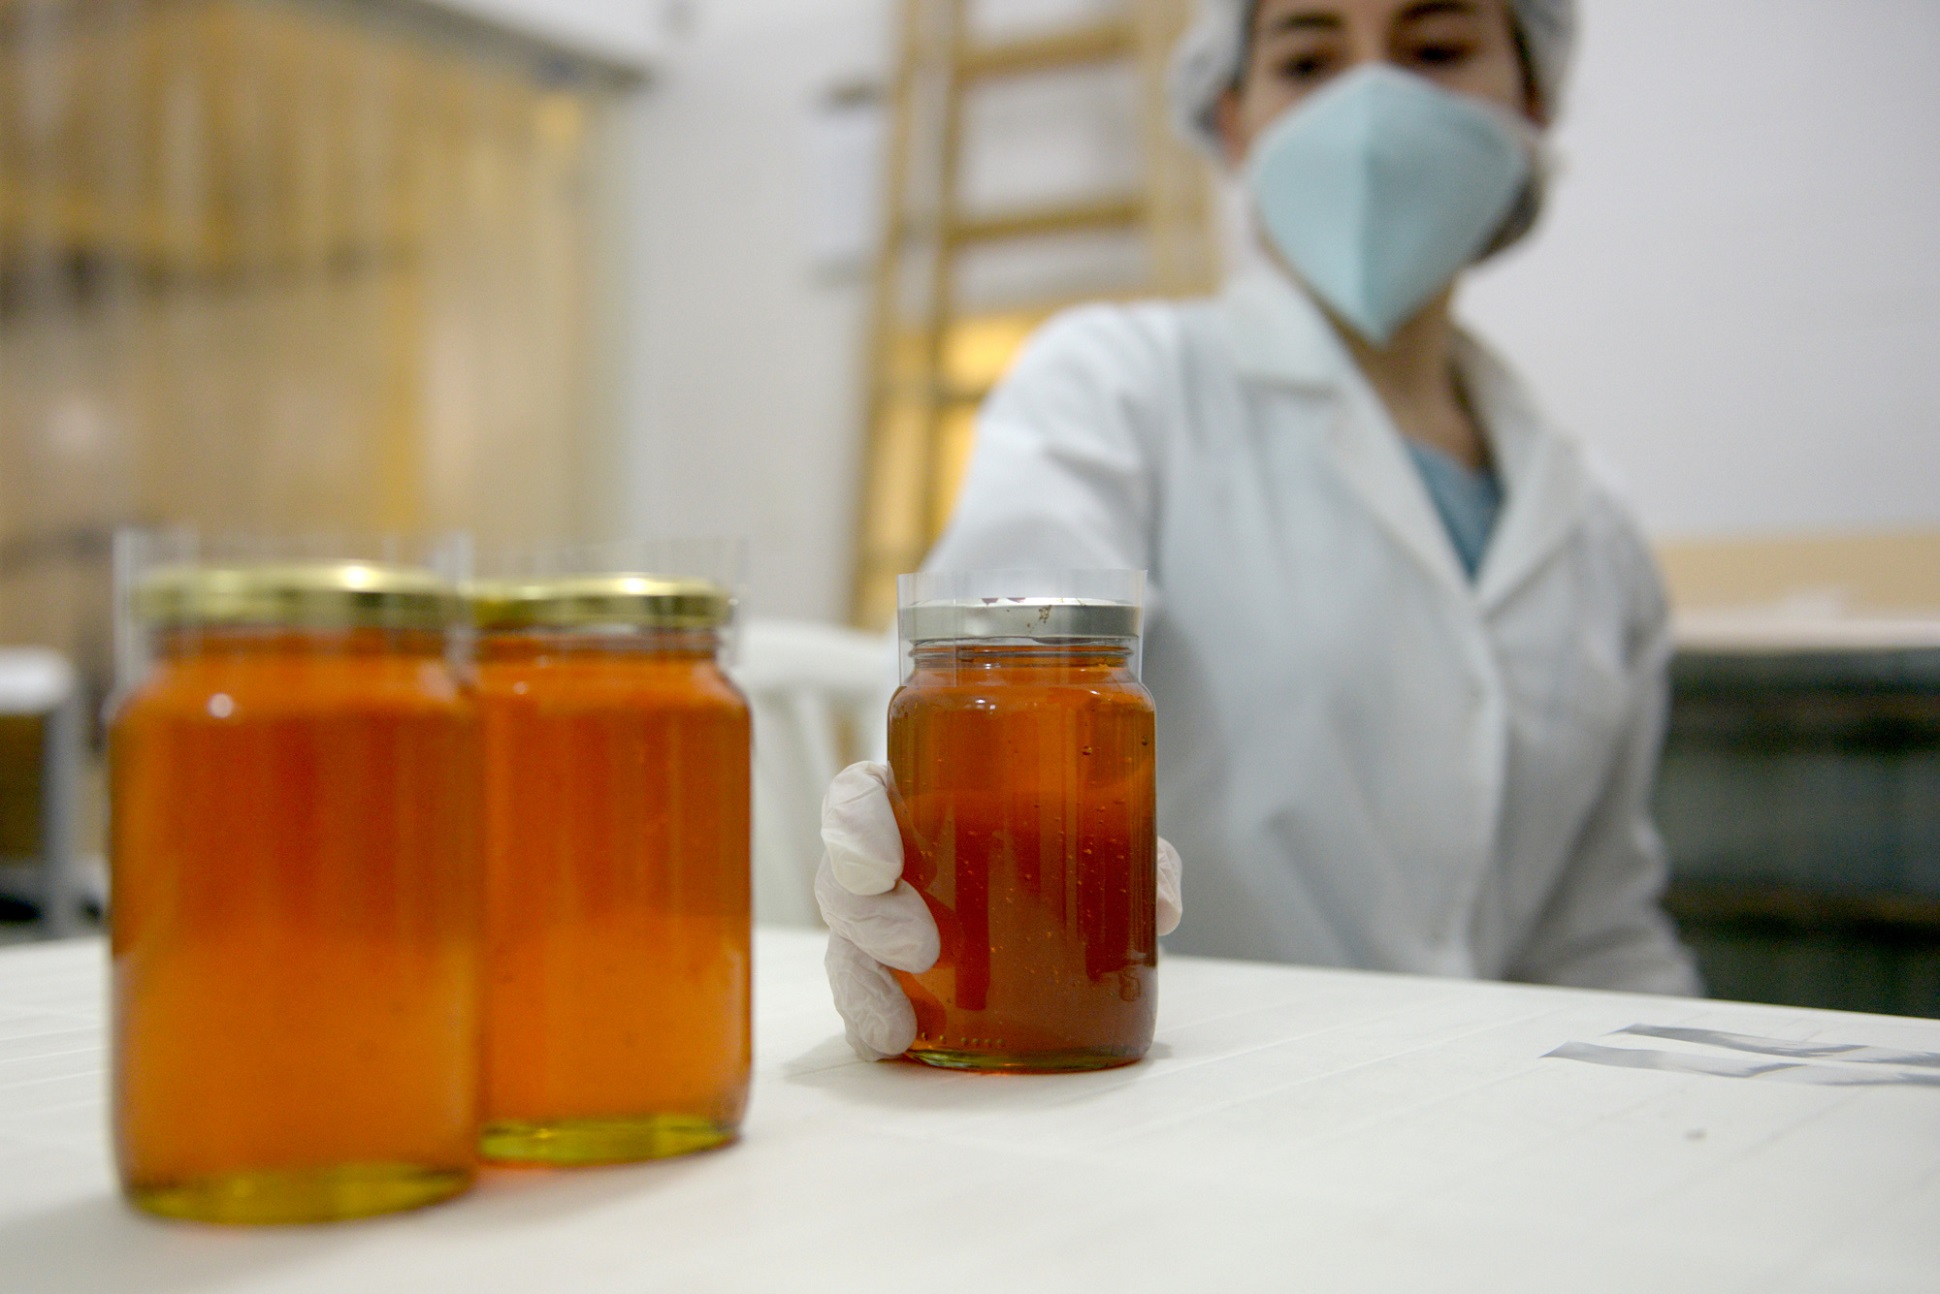 Después de una década la Argentina podrá exportar miel fraccionada a Brasil